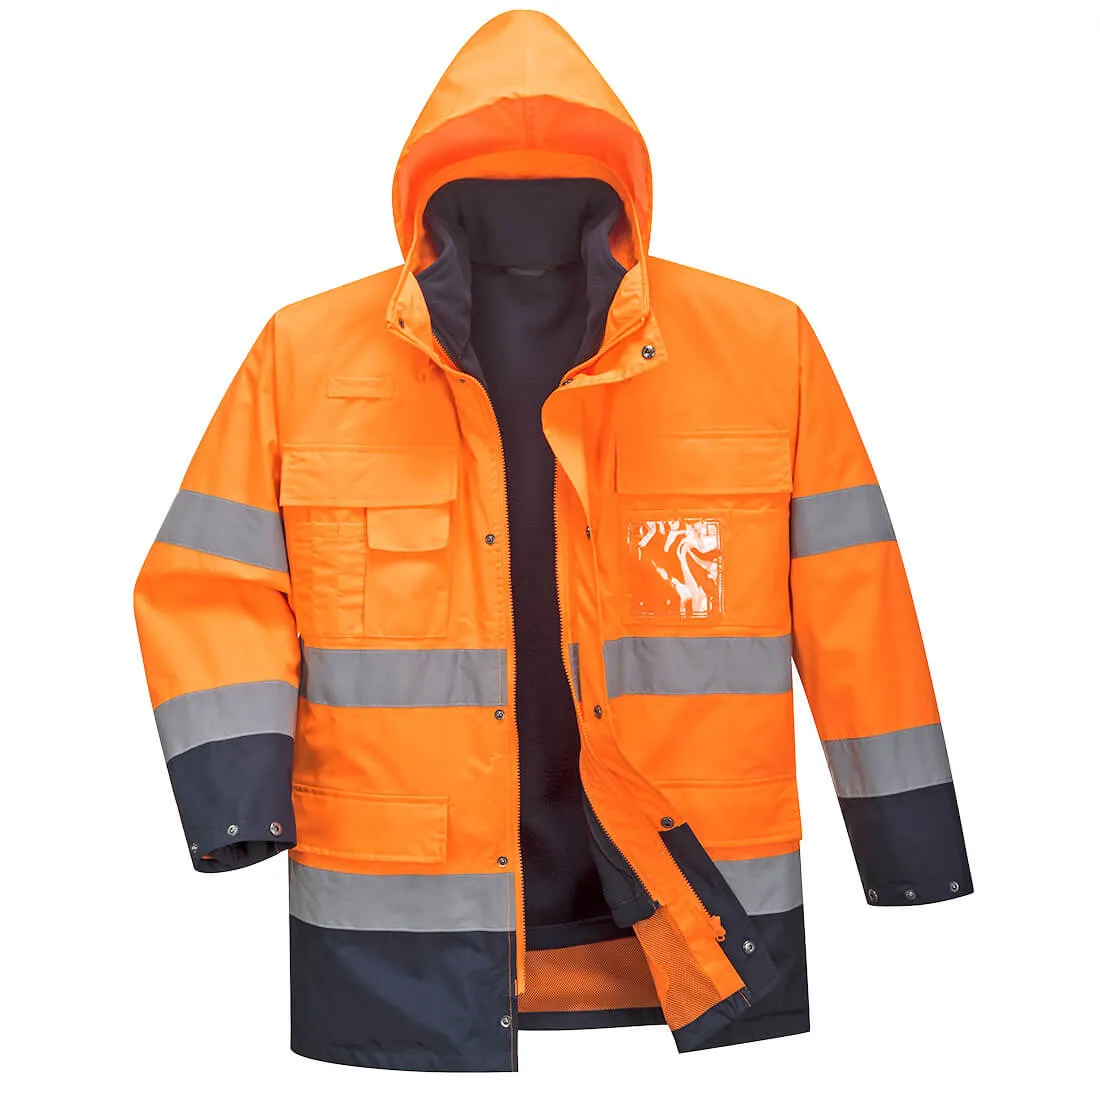 Portwest Lite 3 in 1 Hi Vis Jacket and Detachable Fleece - Orange / Navy, L